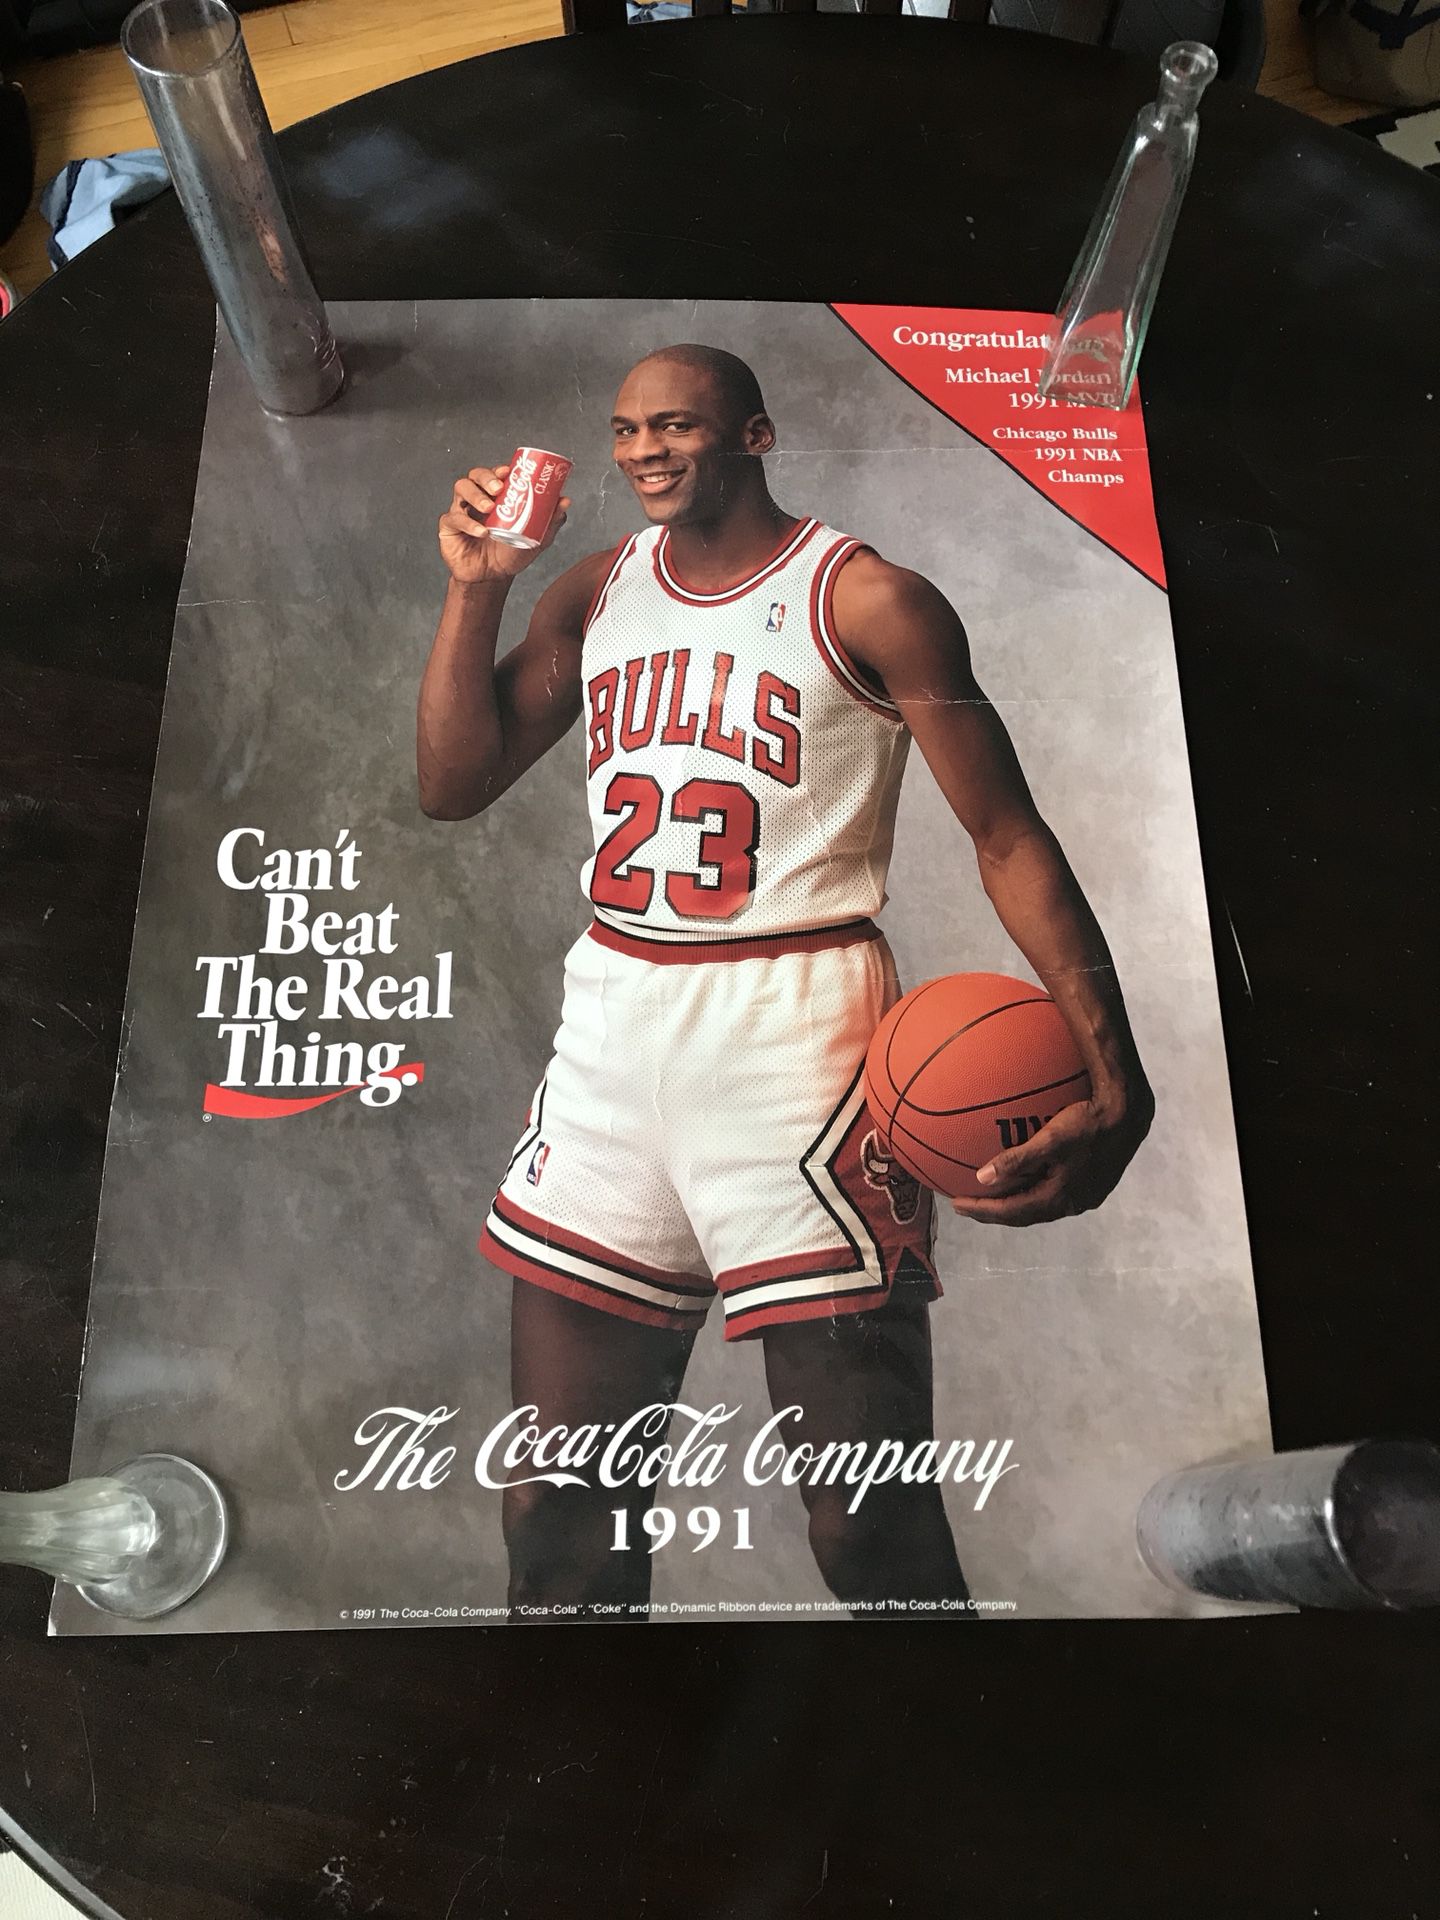 Amedrentador Antorchas florero Michael Jordan Poster / Coke • 1991 • Original Vintage for Sale in Chicago,  IL - OfferUp